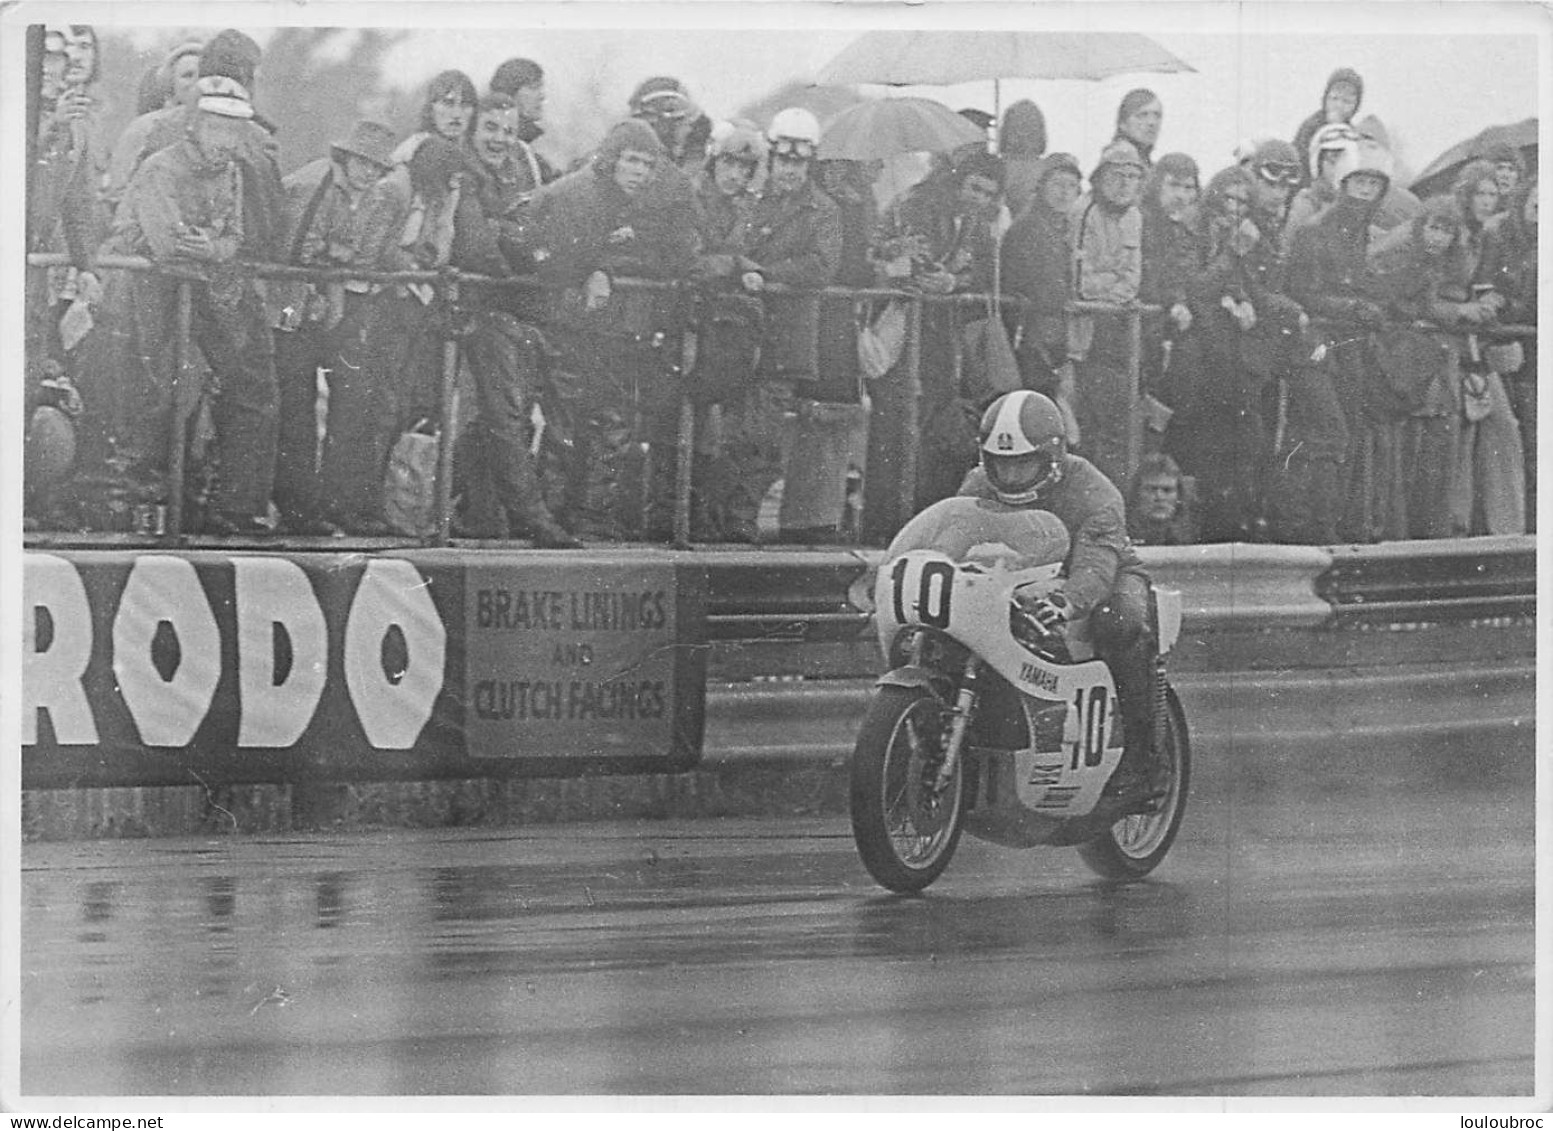 PILOTE MOTO GIACOMO AGOSTINI COURSE ANNEE 1974 700CC YAMAHA RACE OF THE YEAR PHOTO DE PRESSE ORIGINALE 18X13CM - Sport